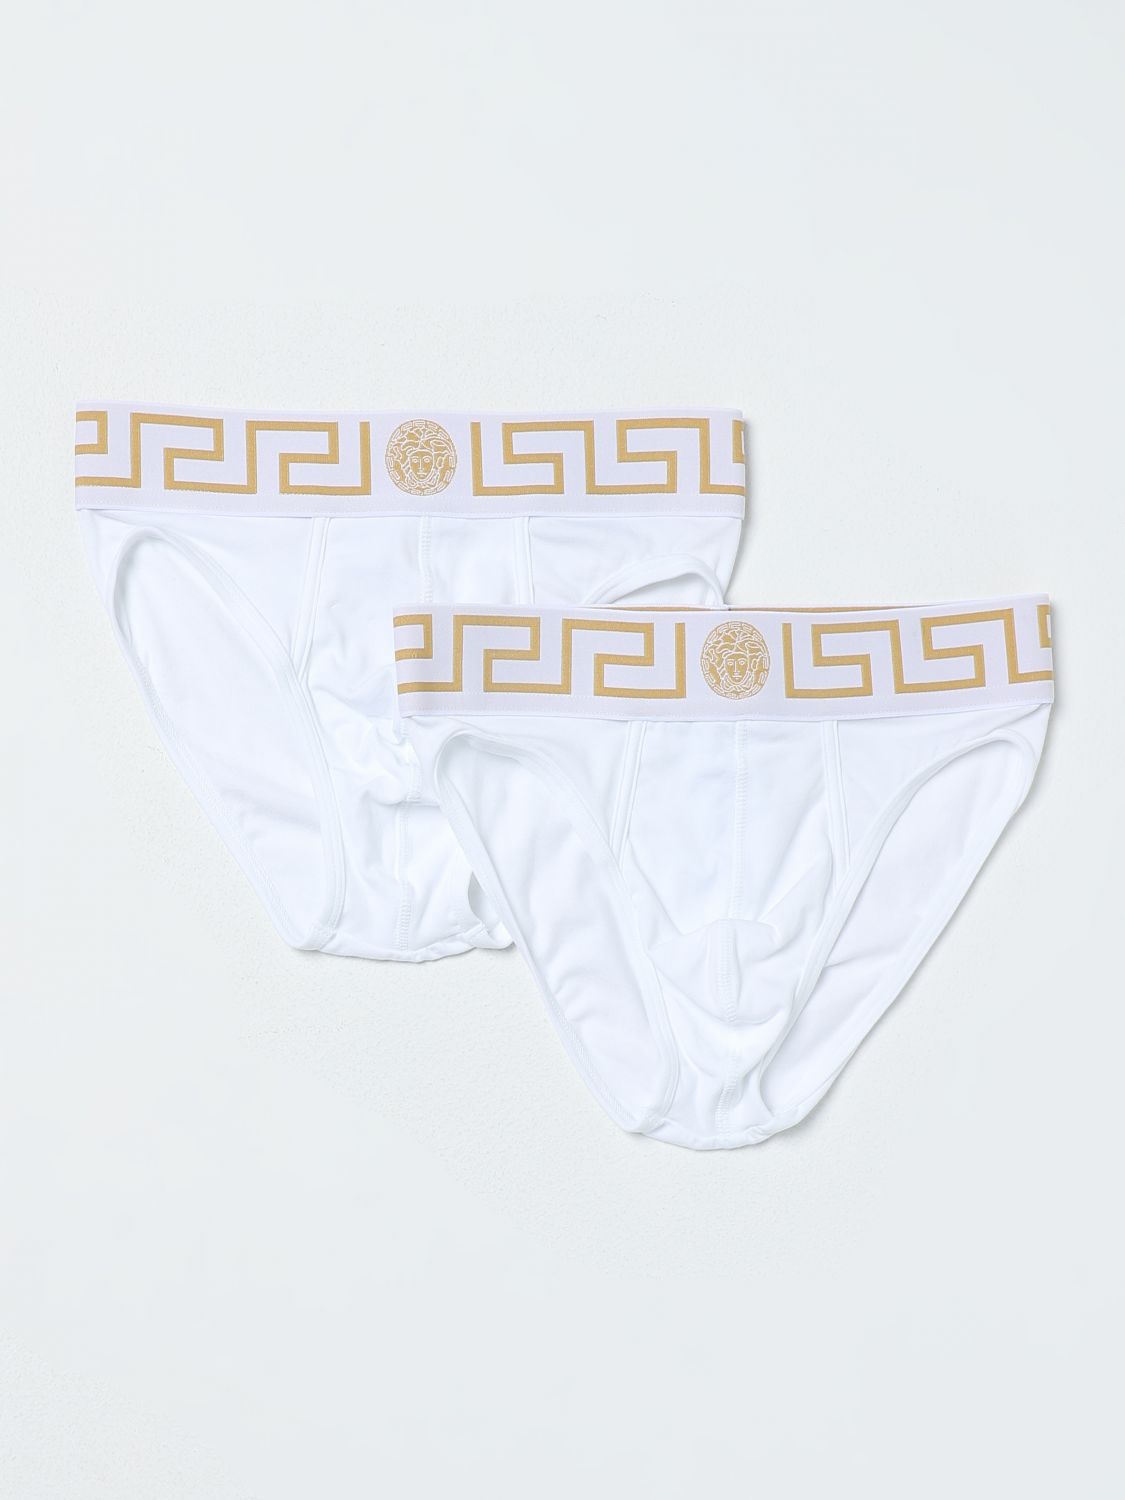 Versace Underwear  Men Color White